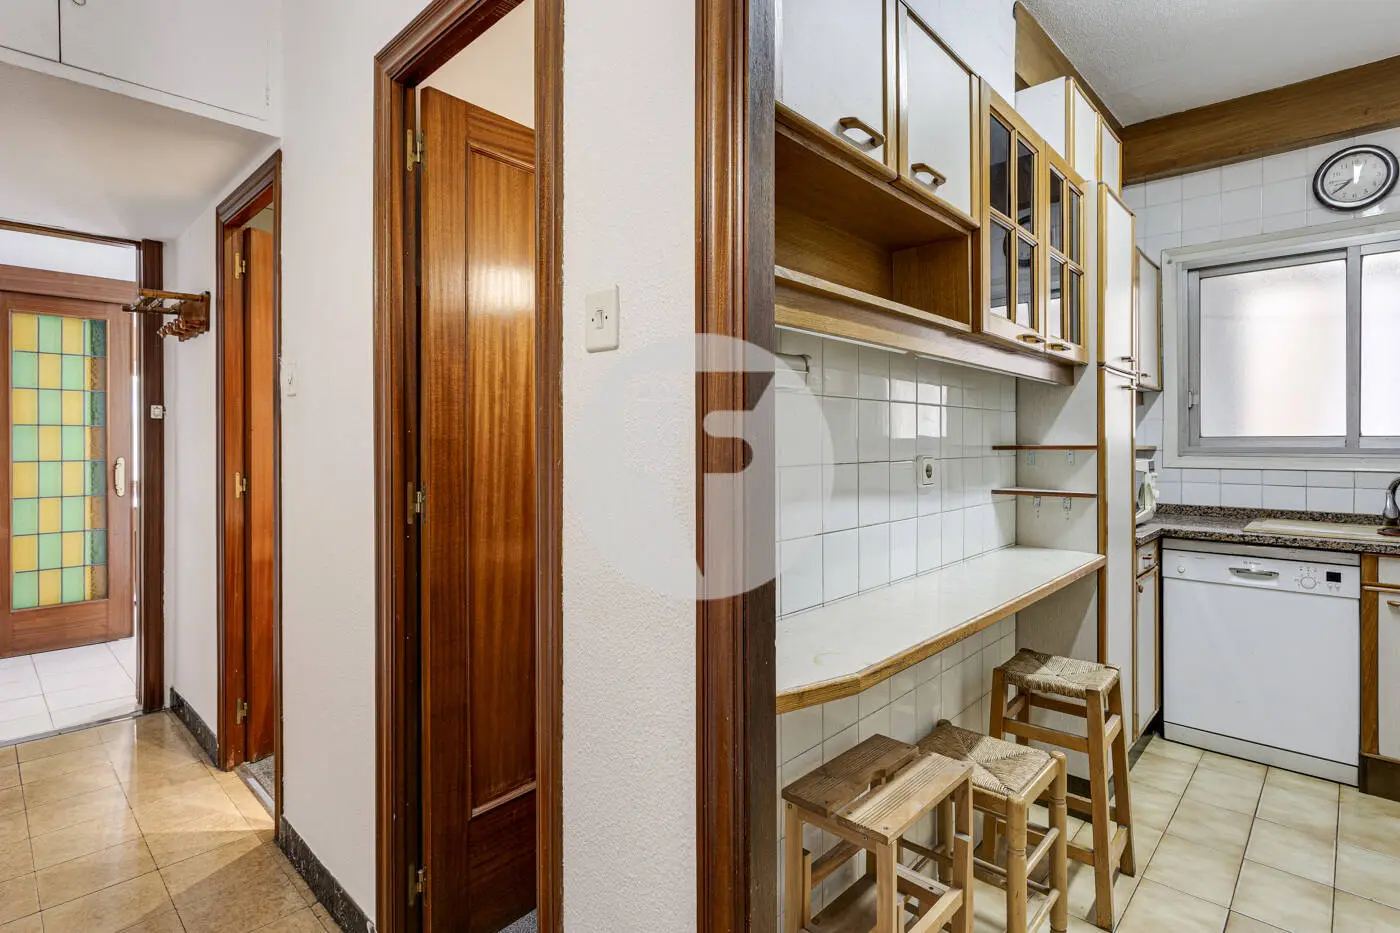 3-bedroom apartment located in the Nova Esquerra de l'Eixample neighborhood of Barcelona. 10